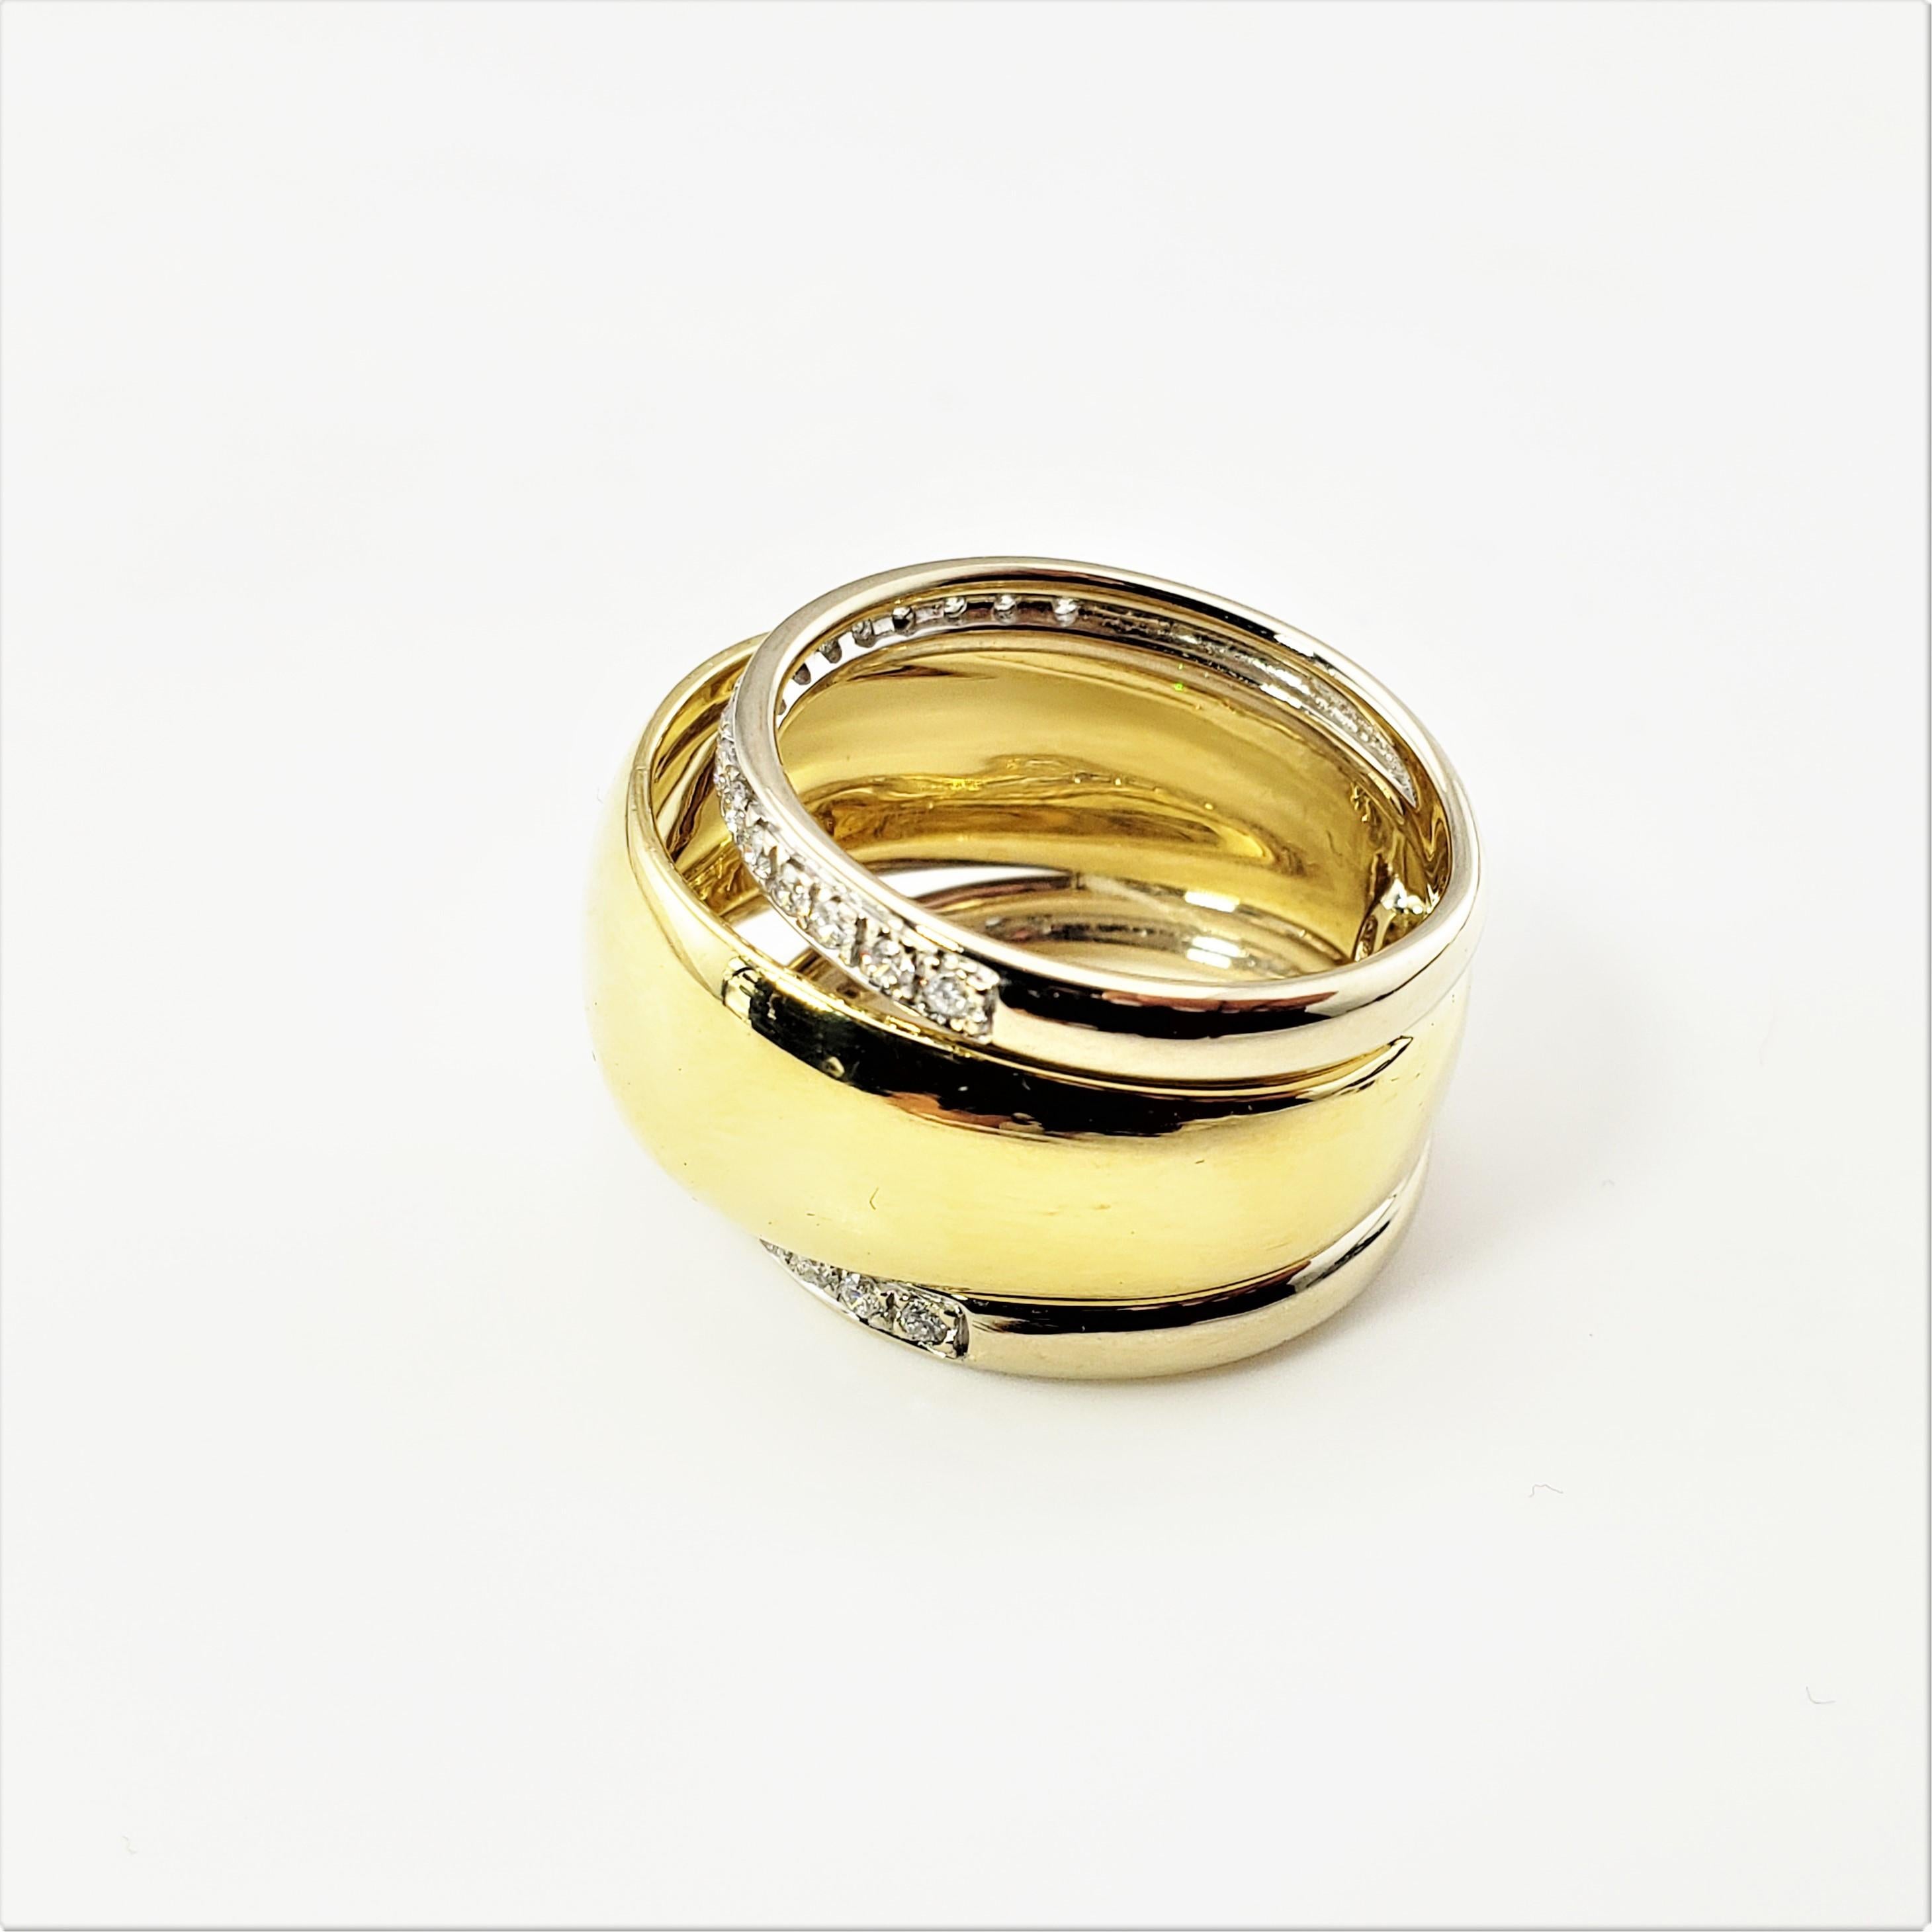 Brilliant Cut 18 Karat Yellow Gold and Diamond Band Ring